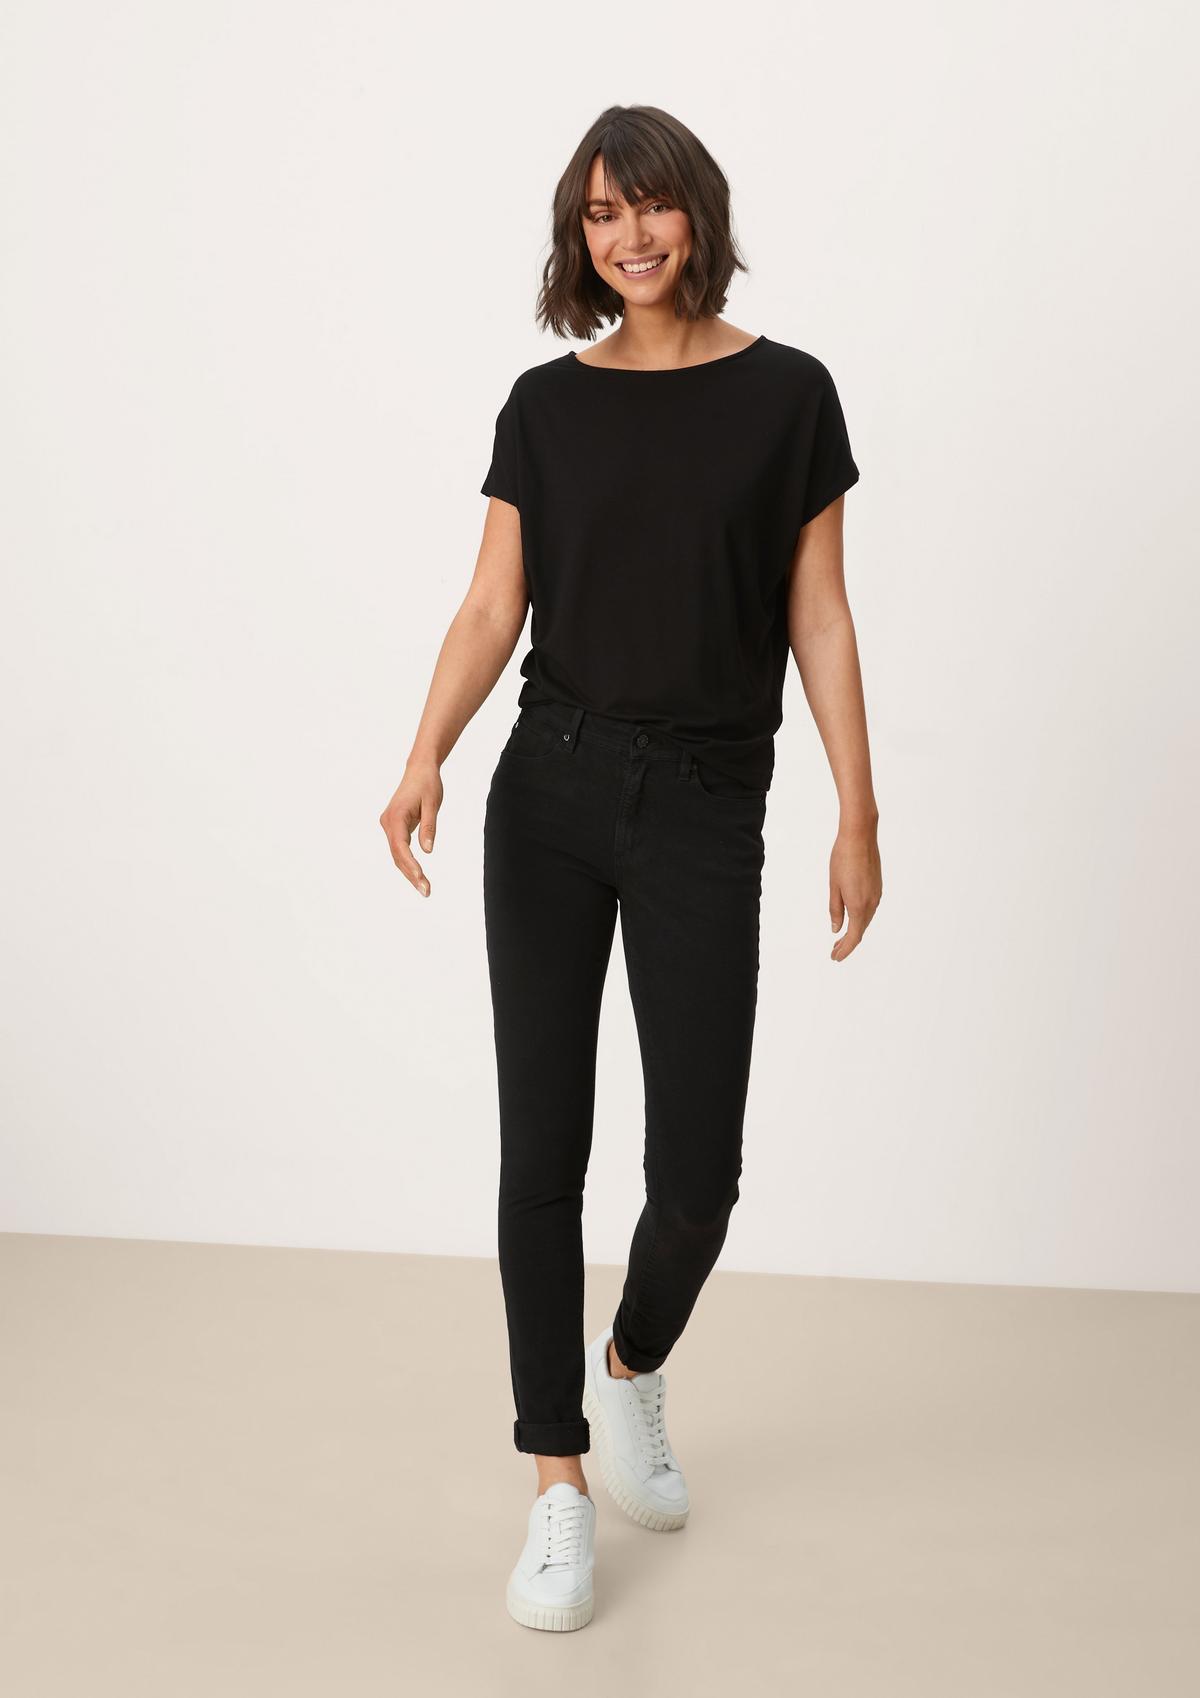 Izabell jeans / skinny fit / mid rise / skinny leg - black